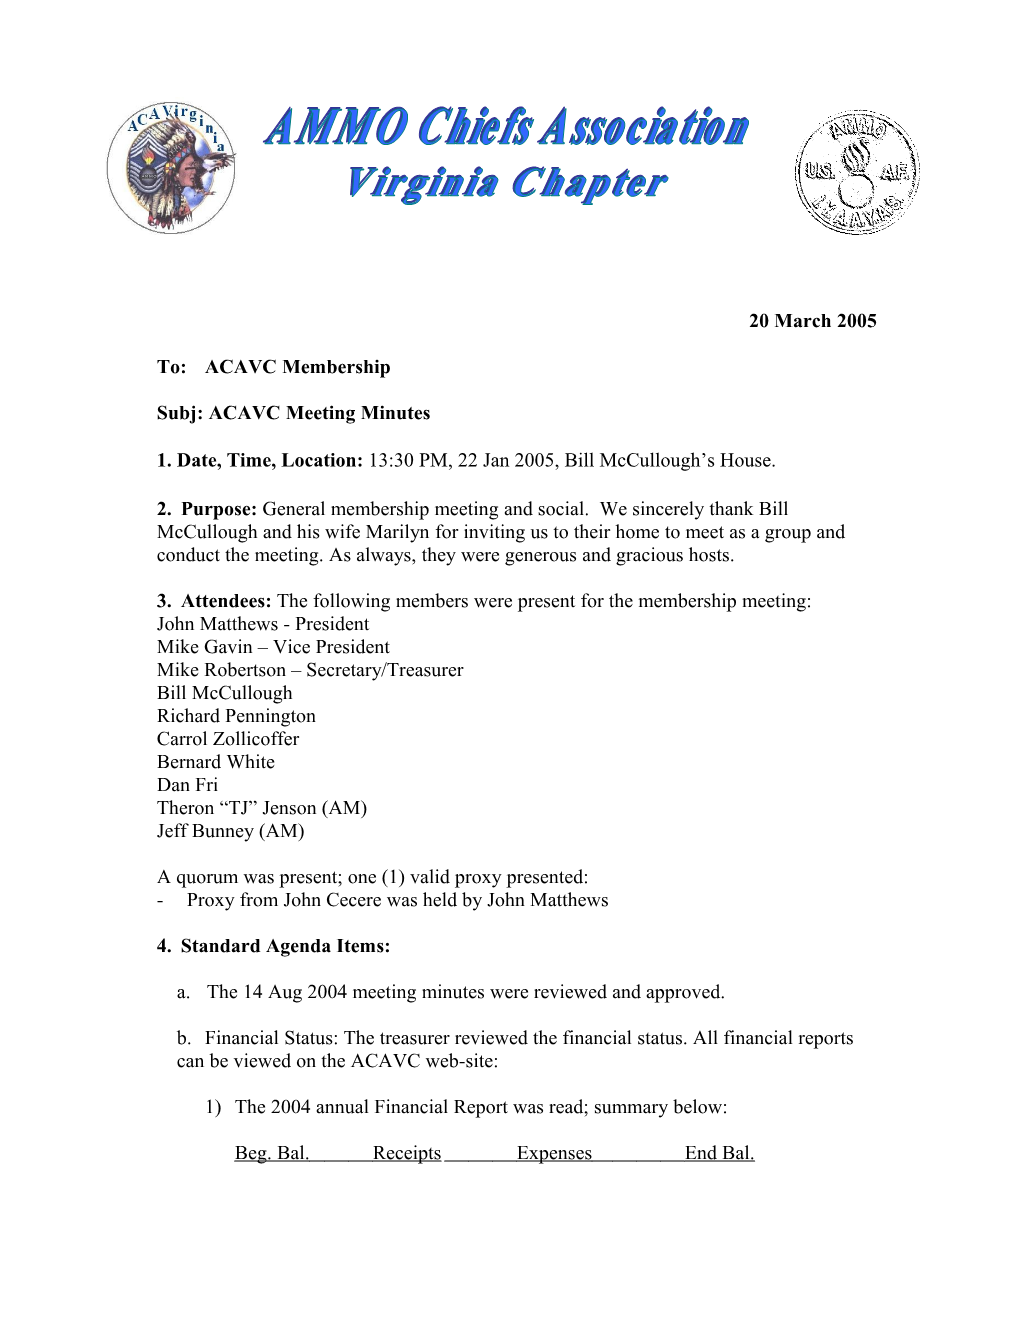 Subj: ACAVC Meeting Minutes